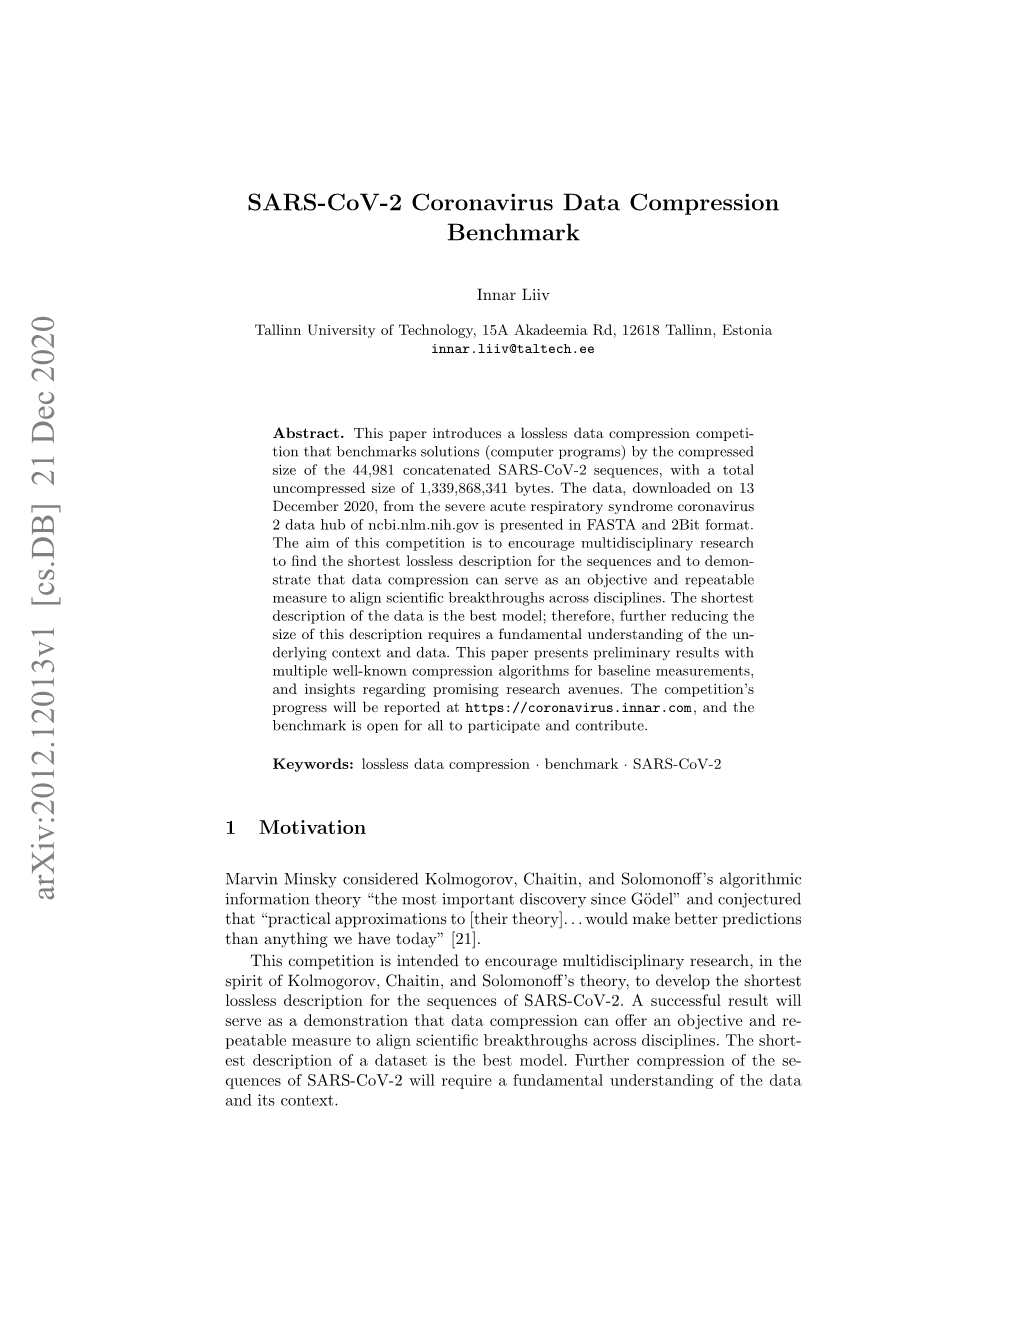 SARS-Cov-2 Coronavirus Data Compression Benchmark Is to ﬁnd the Kolmogorov Complexity of SARS-Cov-2 [29] Sequences